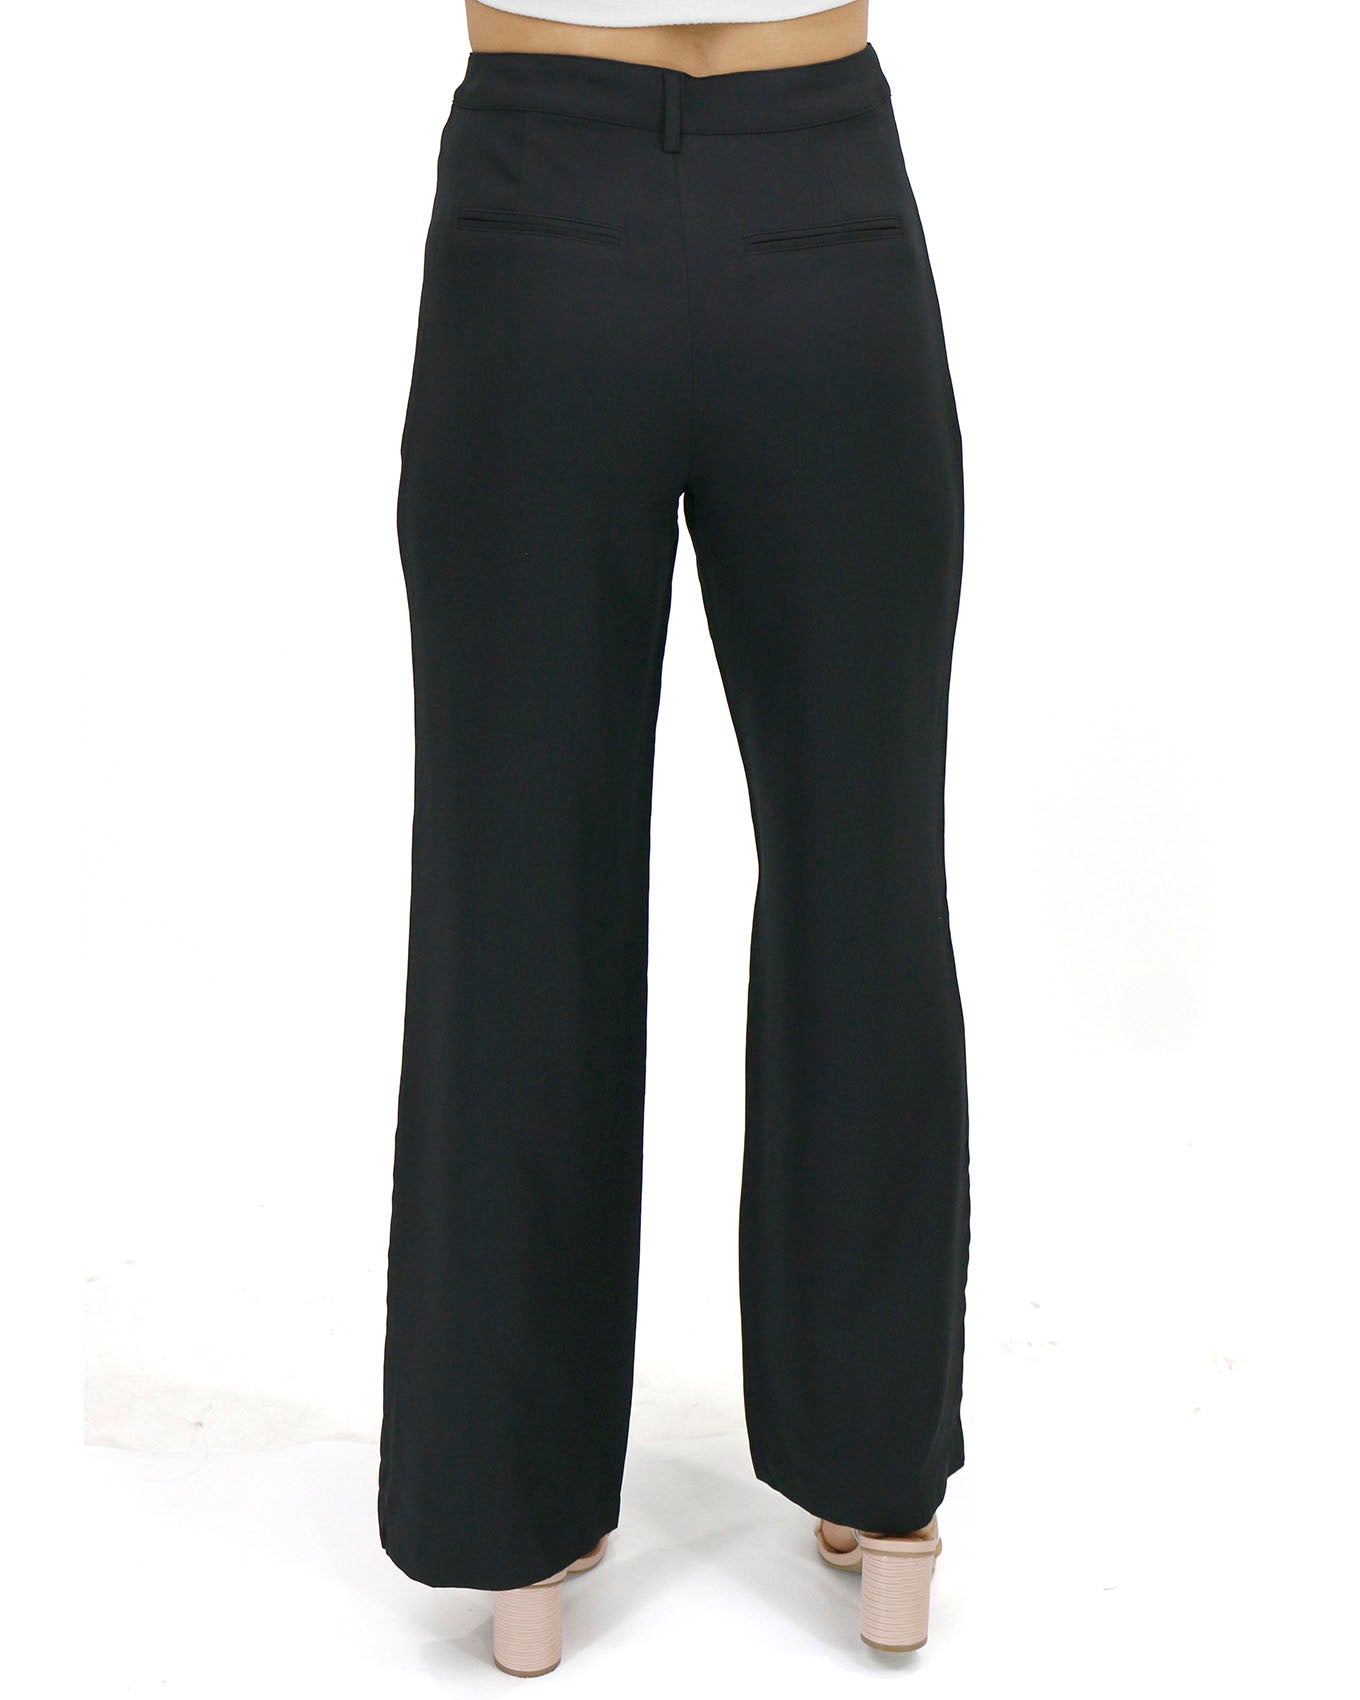 Modal Black Pajama Pants - Black / XS - Grace and Lace